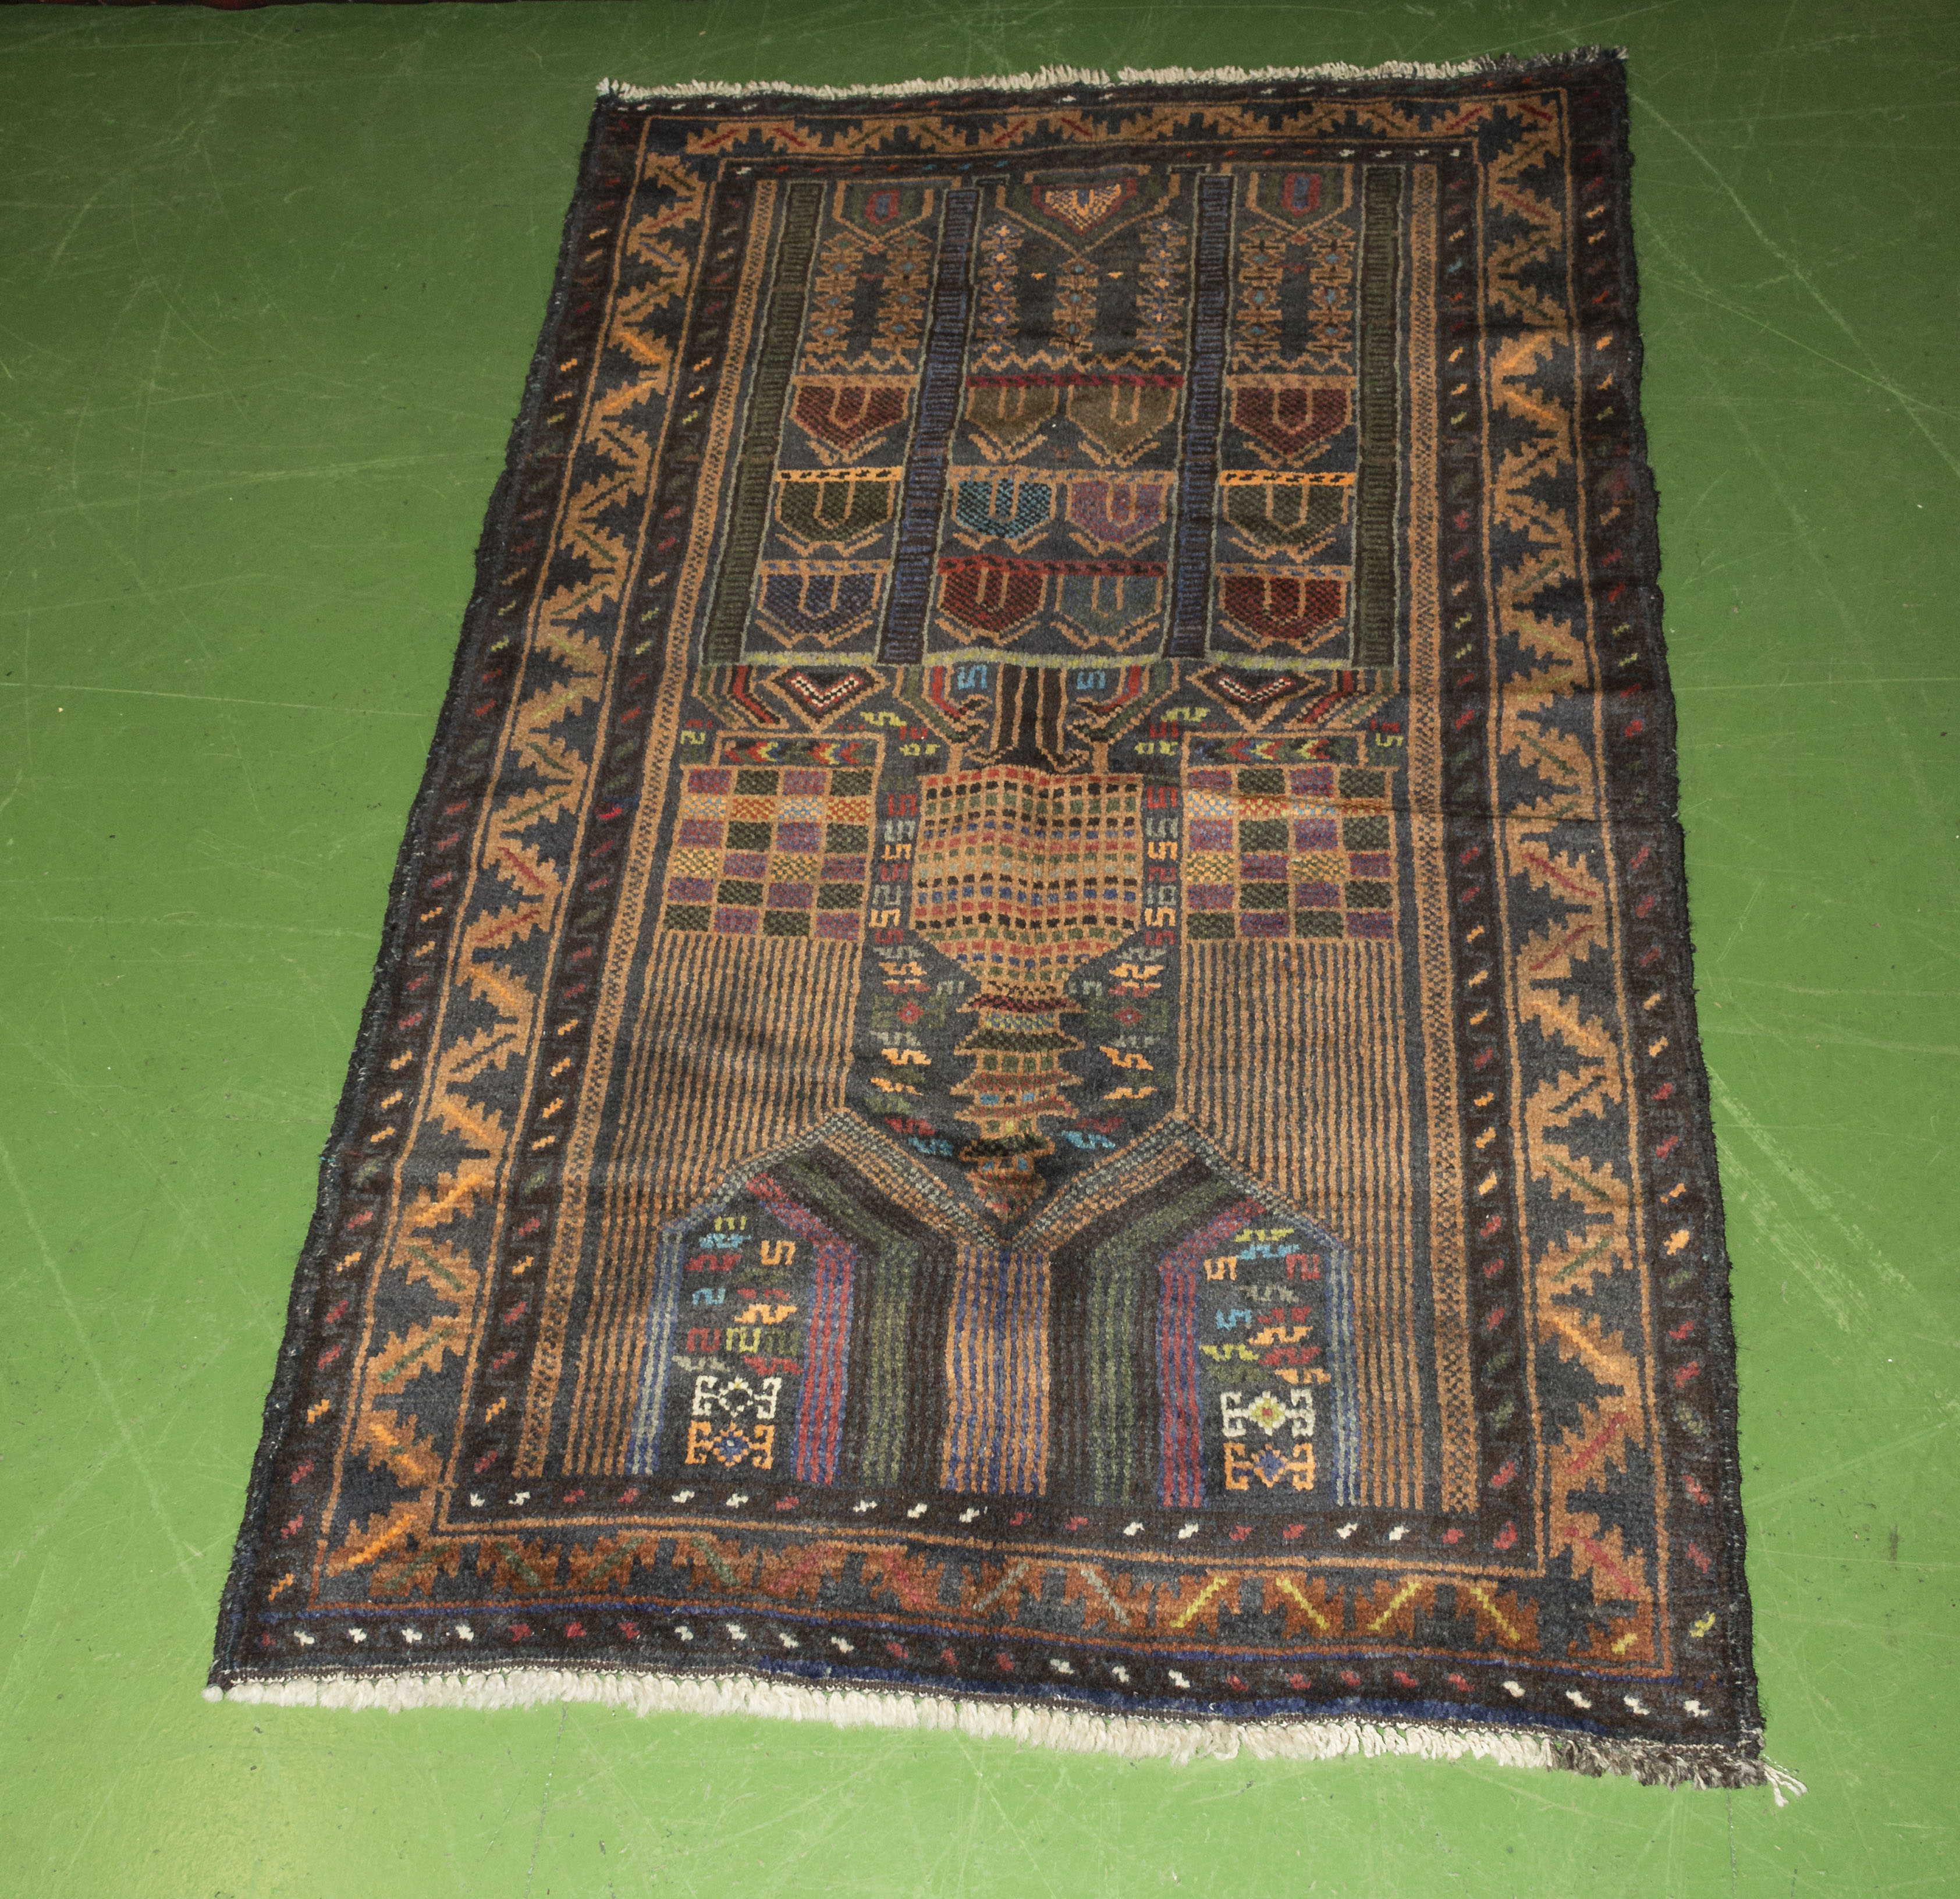 Old Baluchi rug, 138cm x 85cm